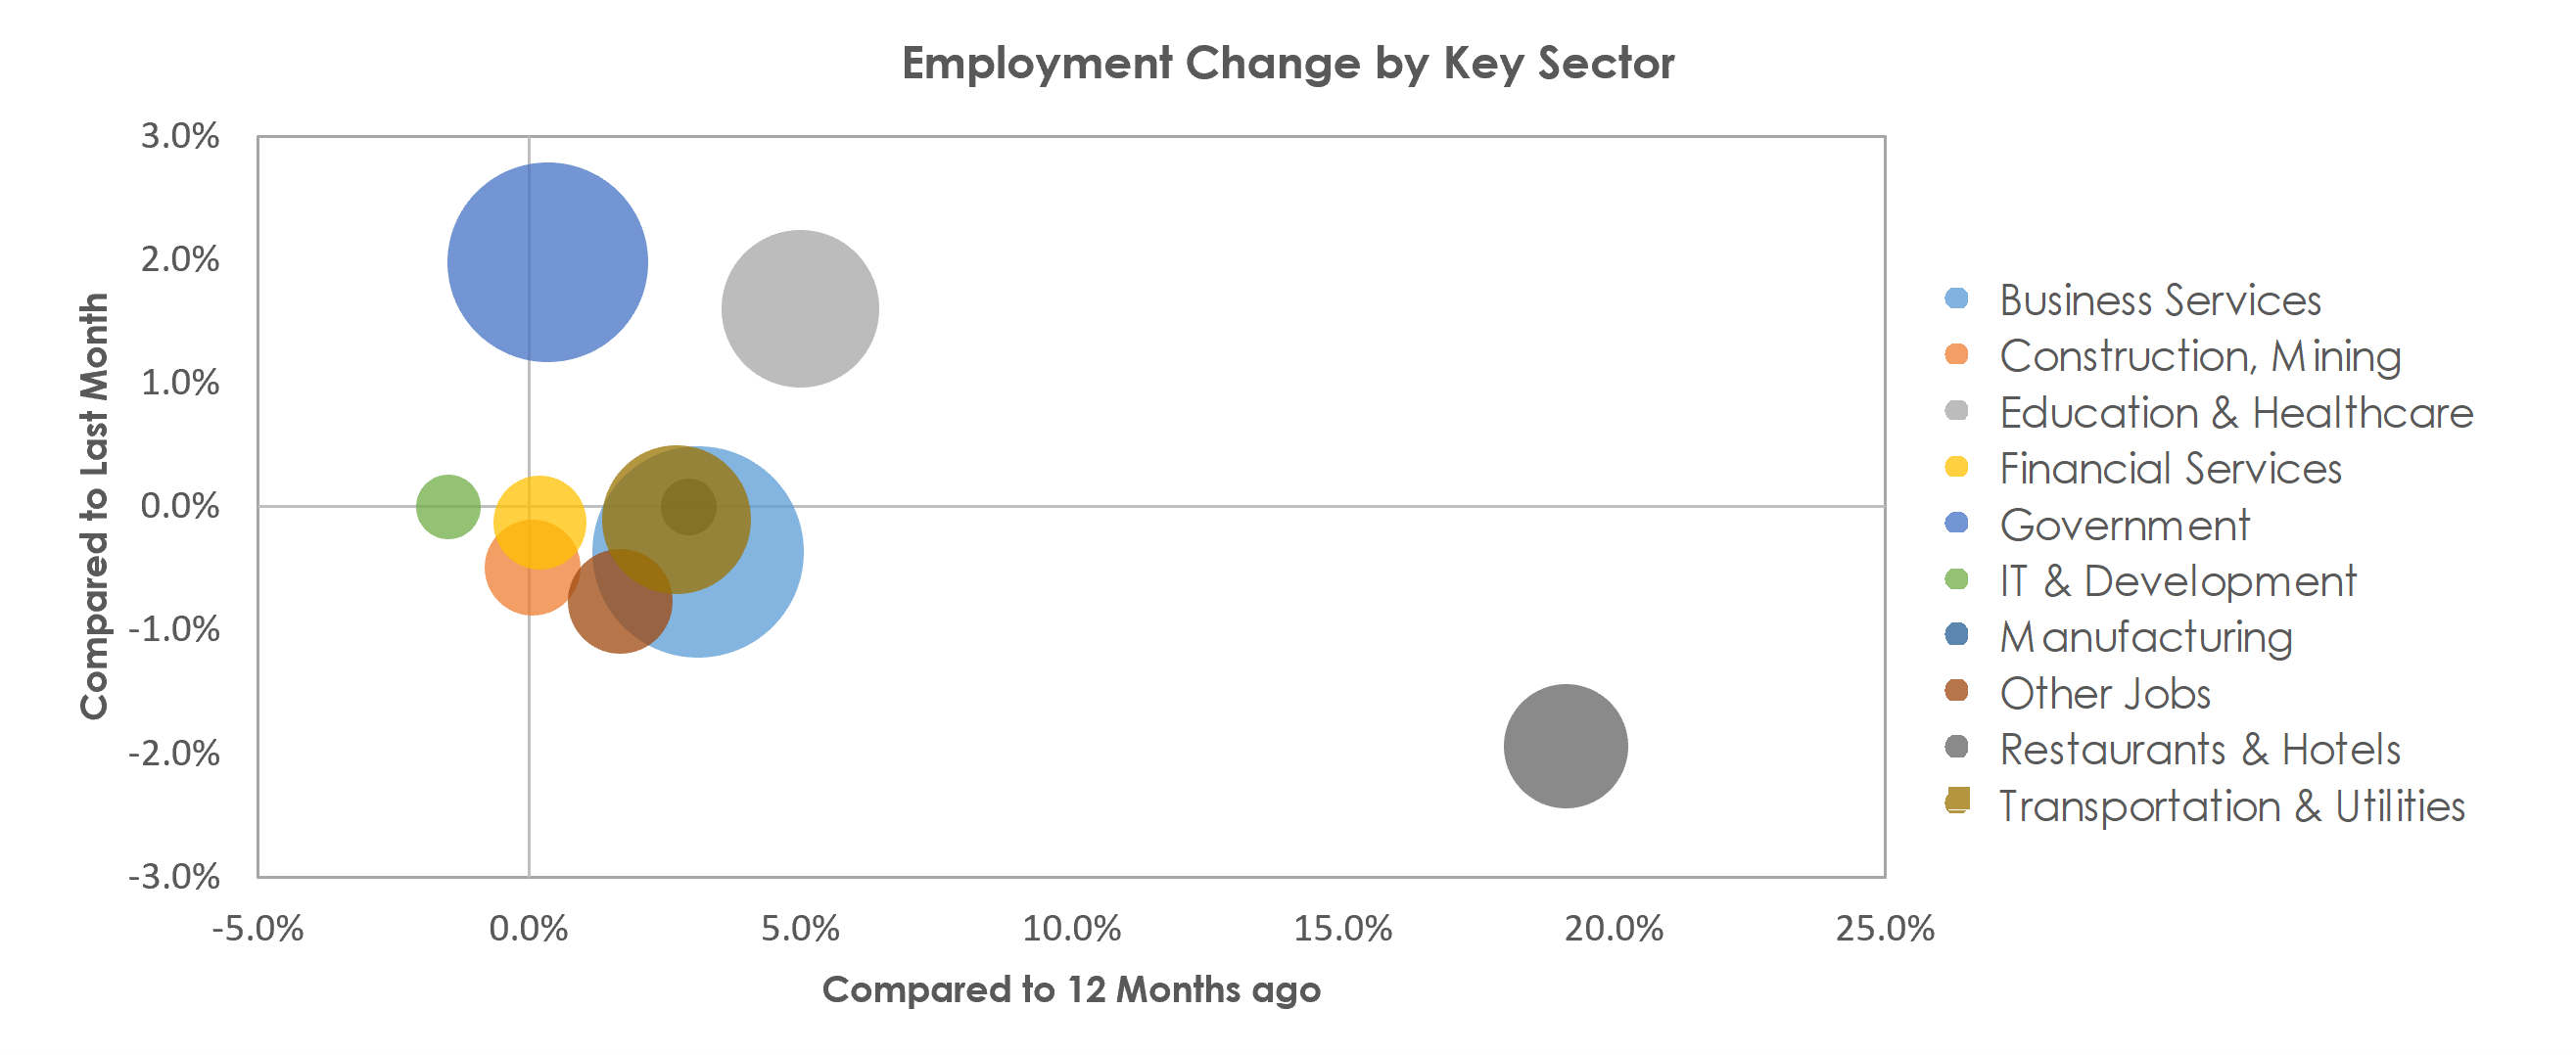 Washington-Arlington-Alexandria, DC-VA-MD-WV Unemployment by Industry September 2021